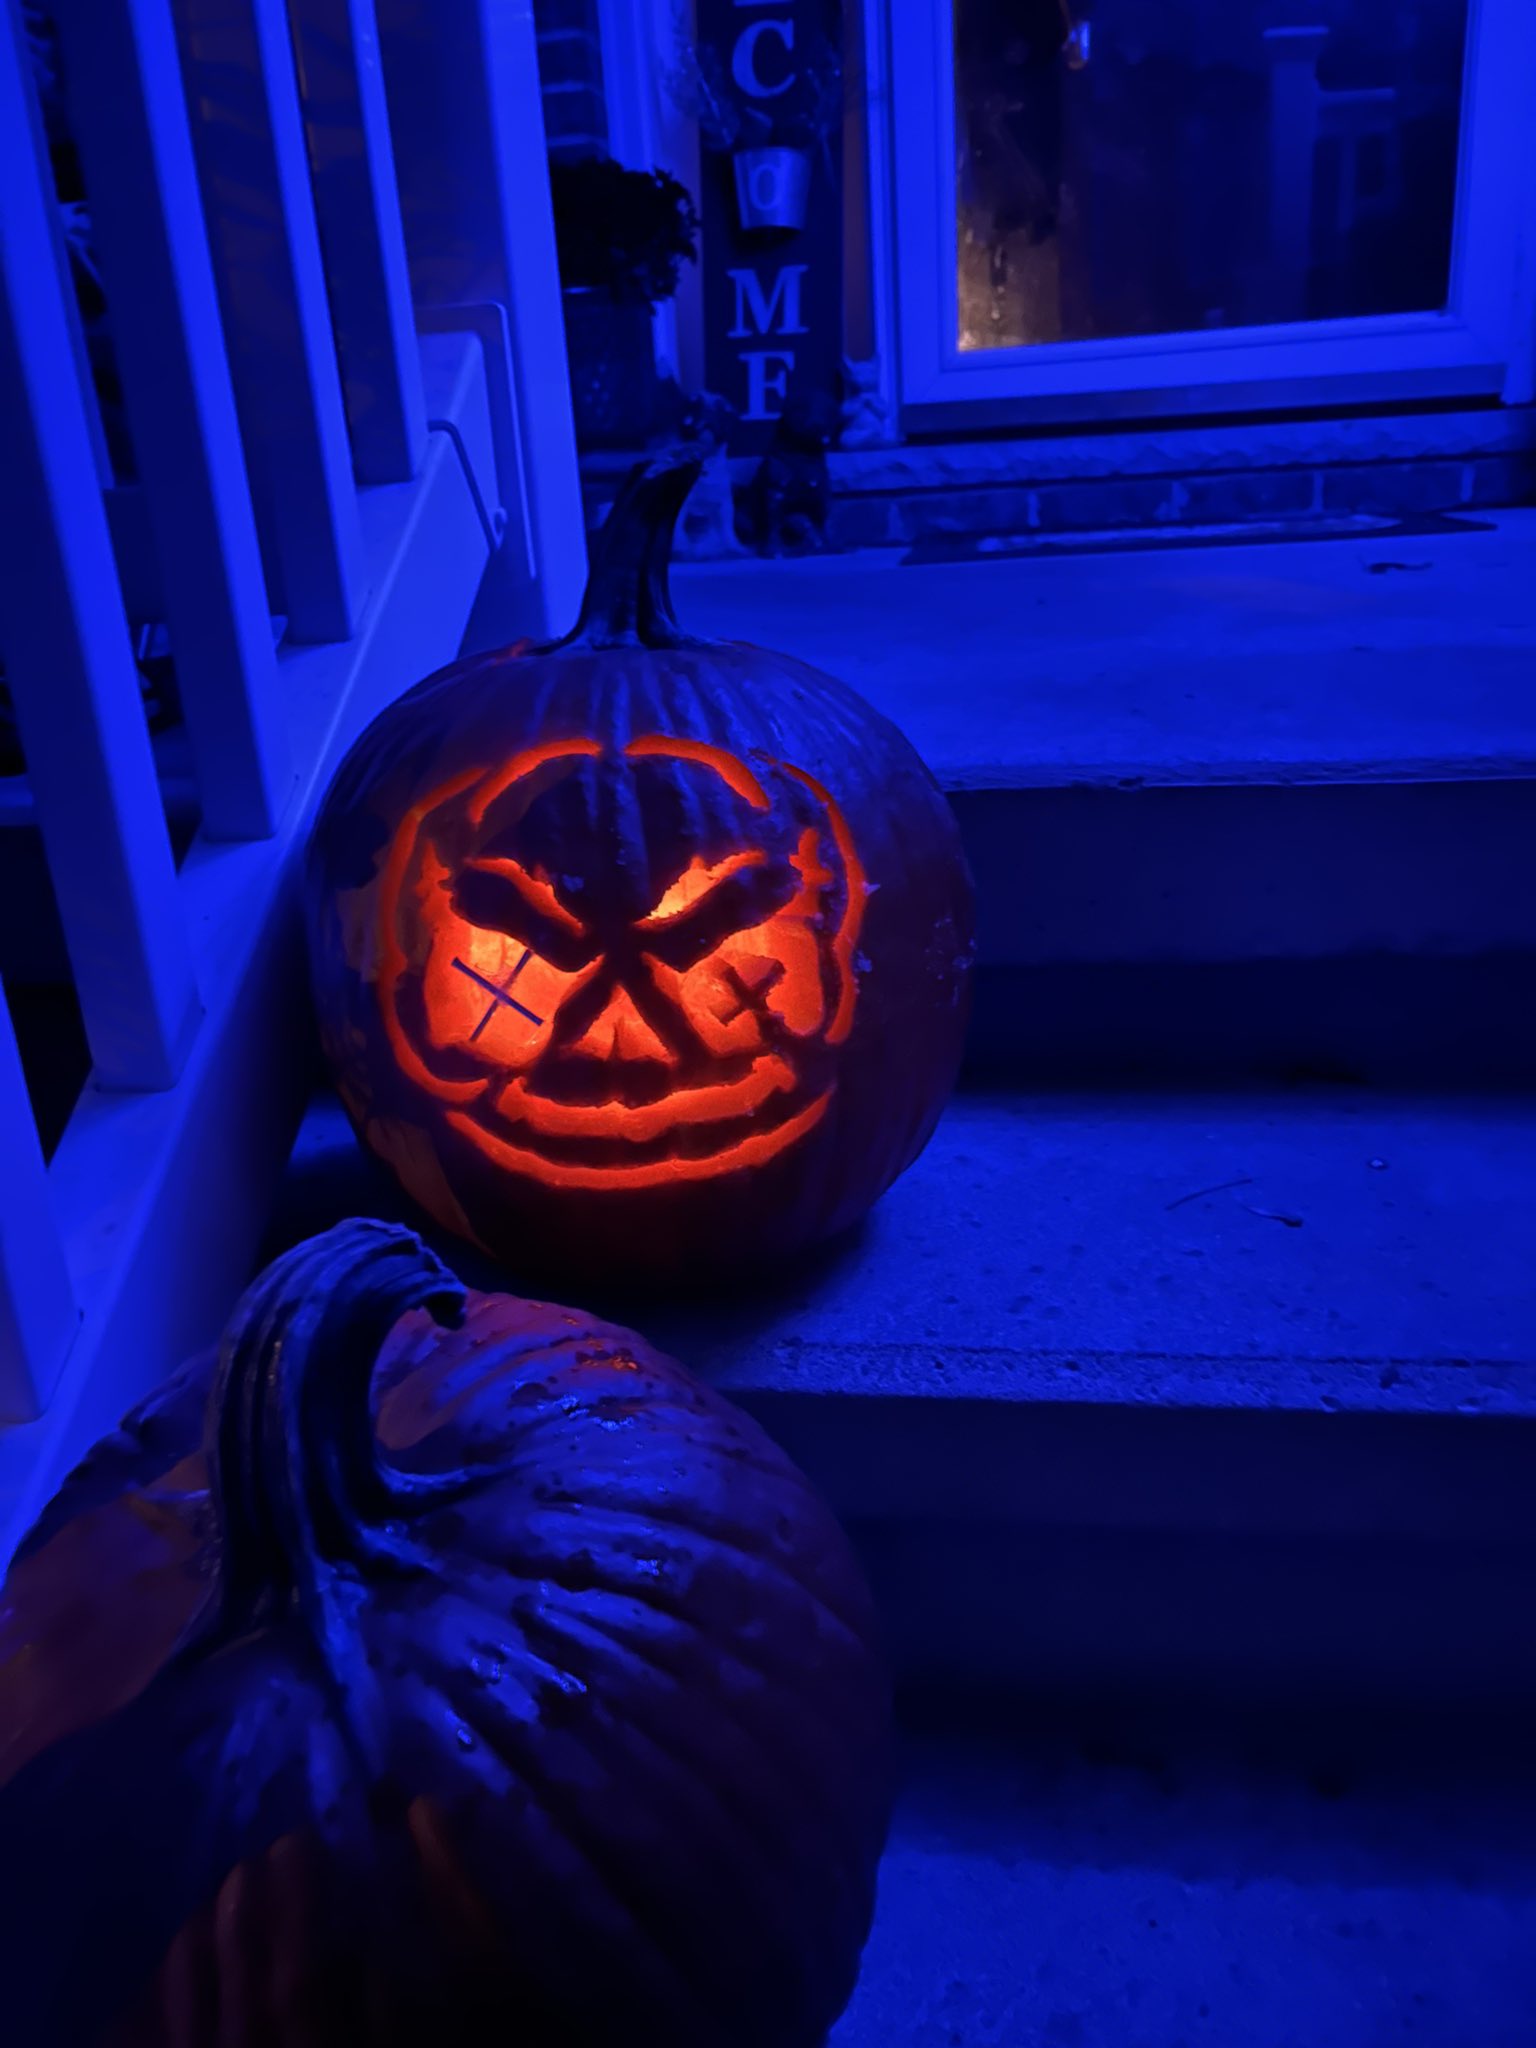 Chazz @StoneColdSteamr, winning pumpkin, Sam, carved, set on front doorstep stairs in the dark